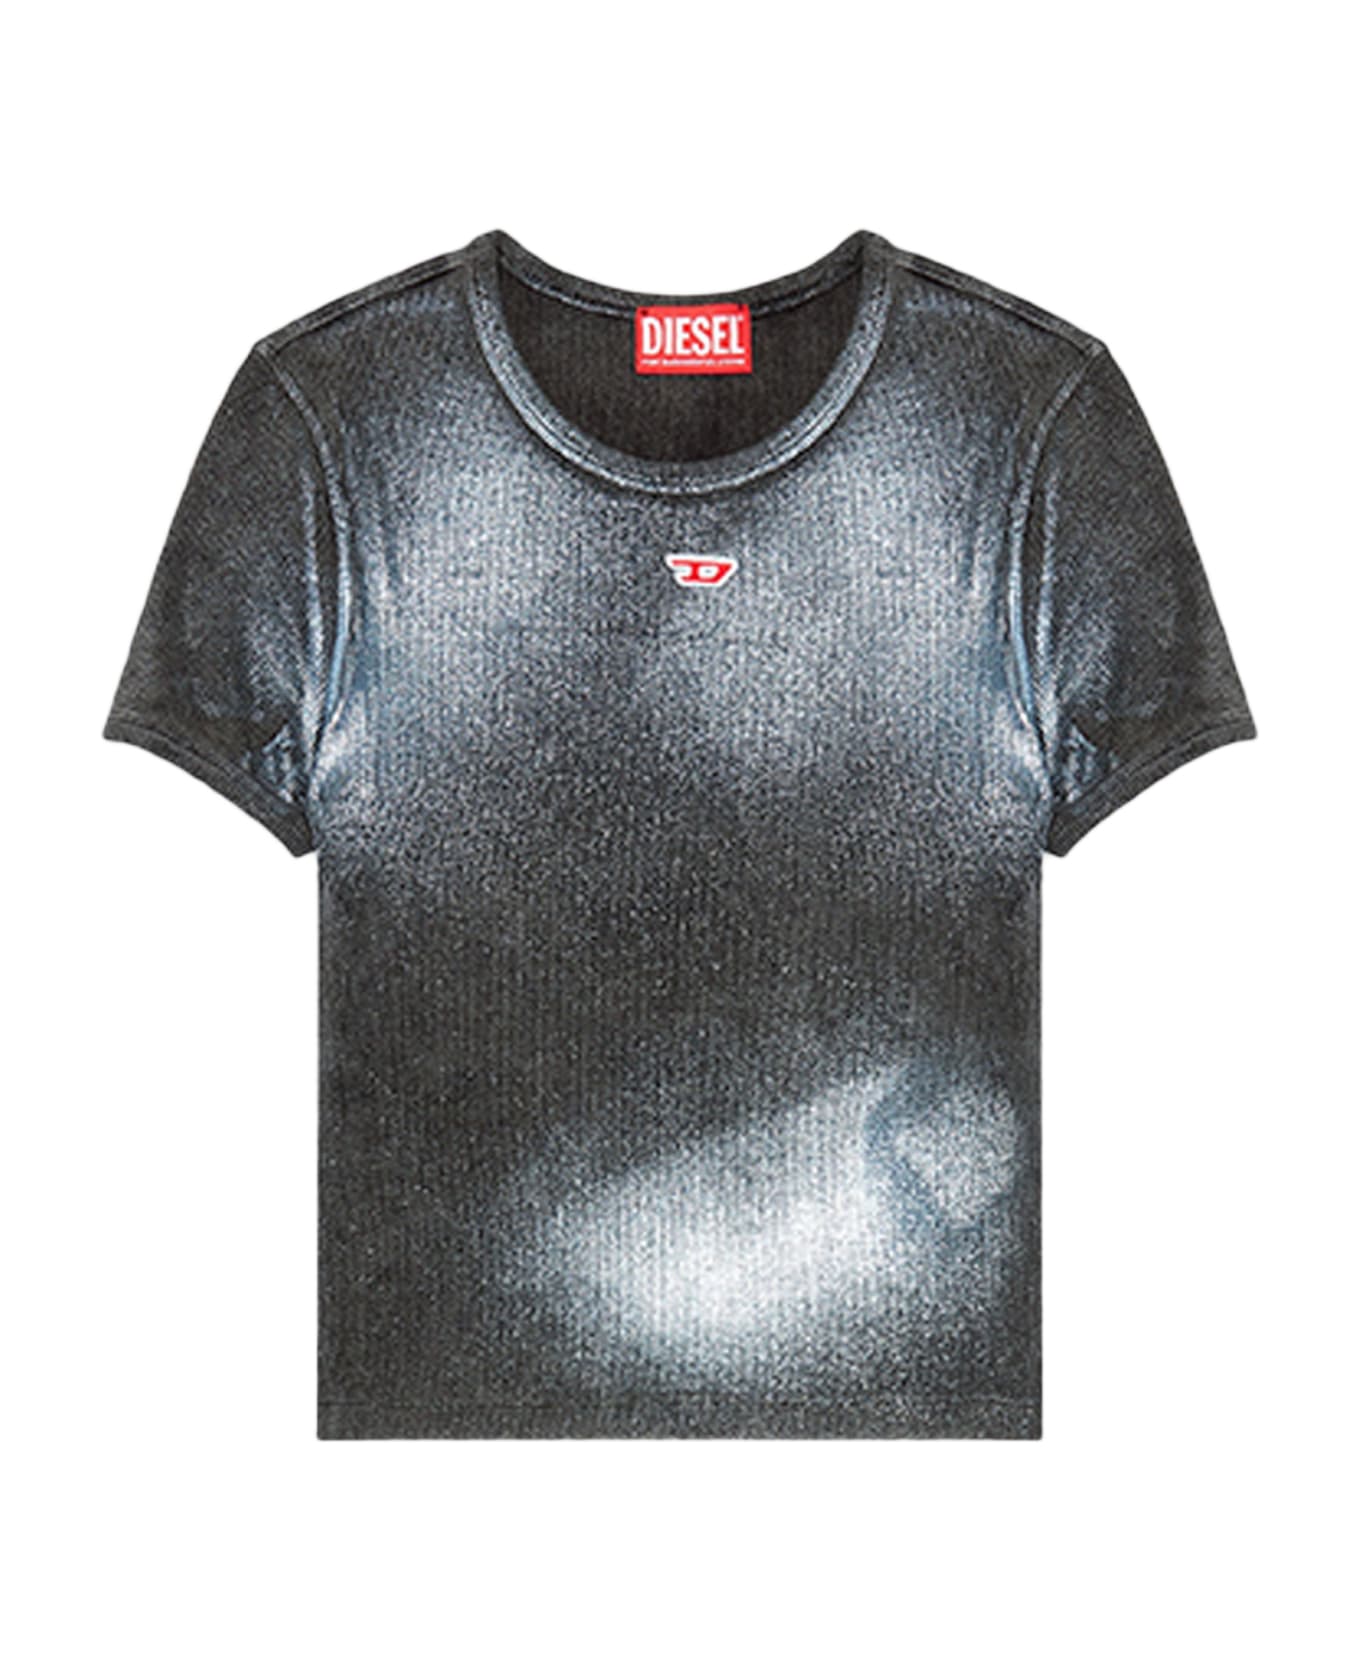 Diesel T-ele-n1 Black ribbed cotton t-shirt with metallic coating - T Ele N1 - Nero Tシャツ